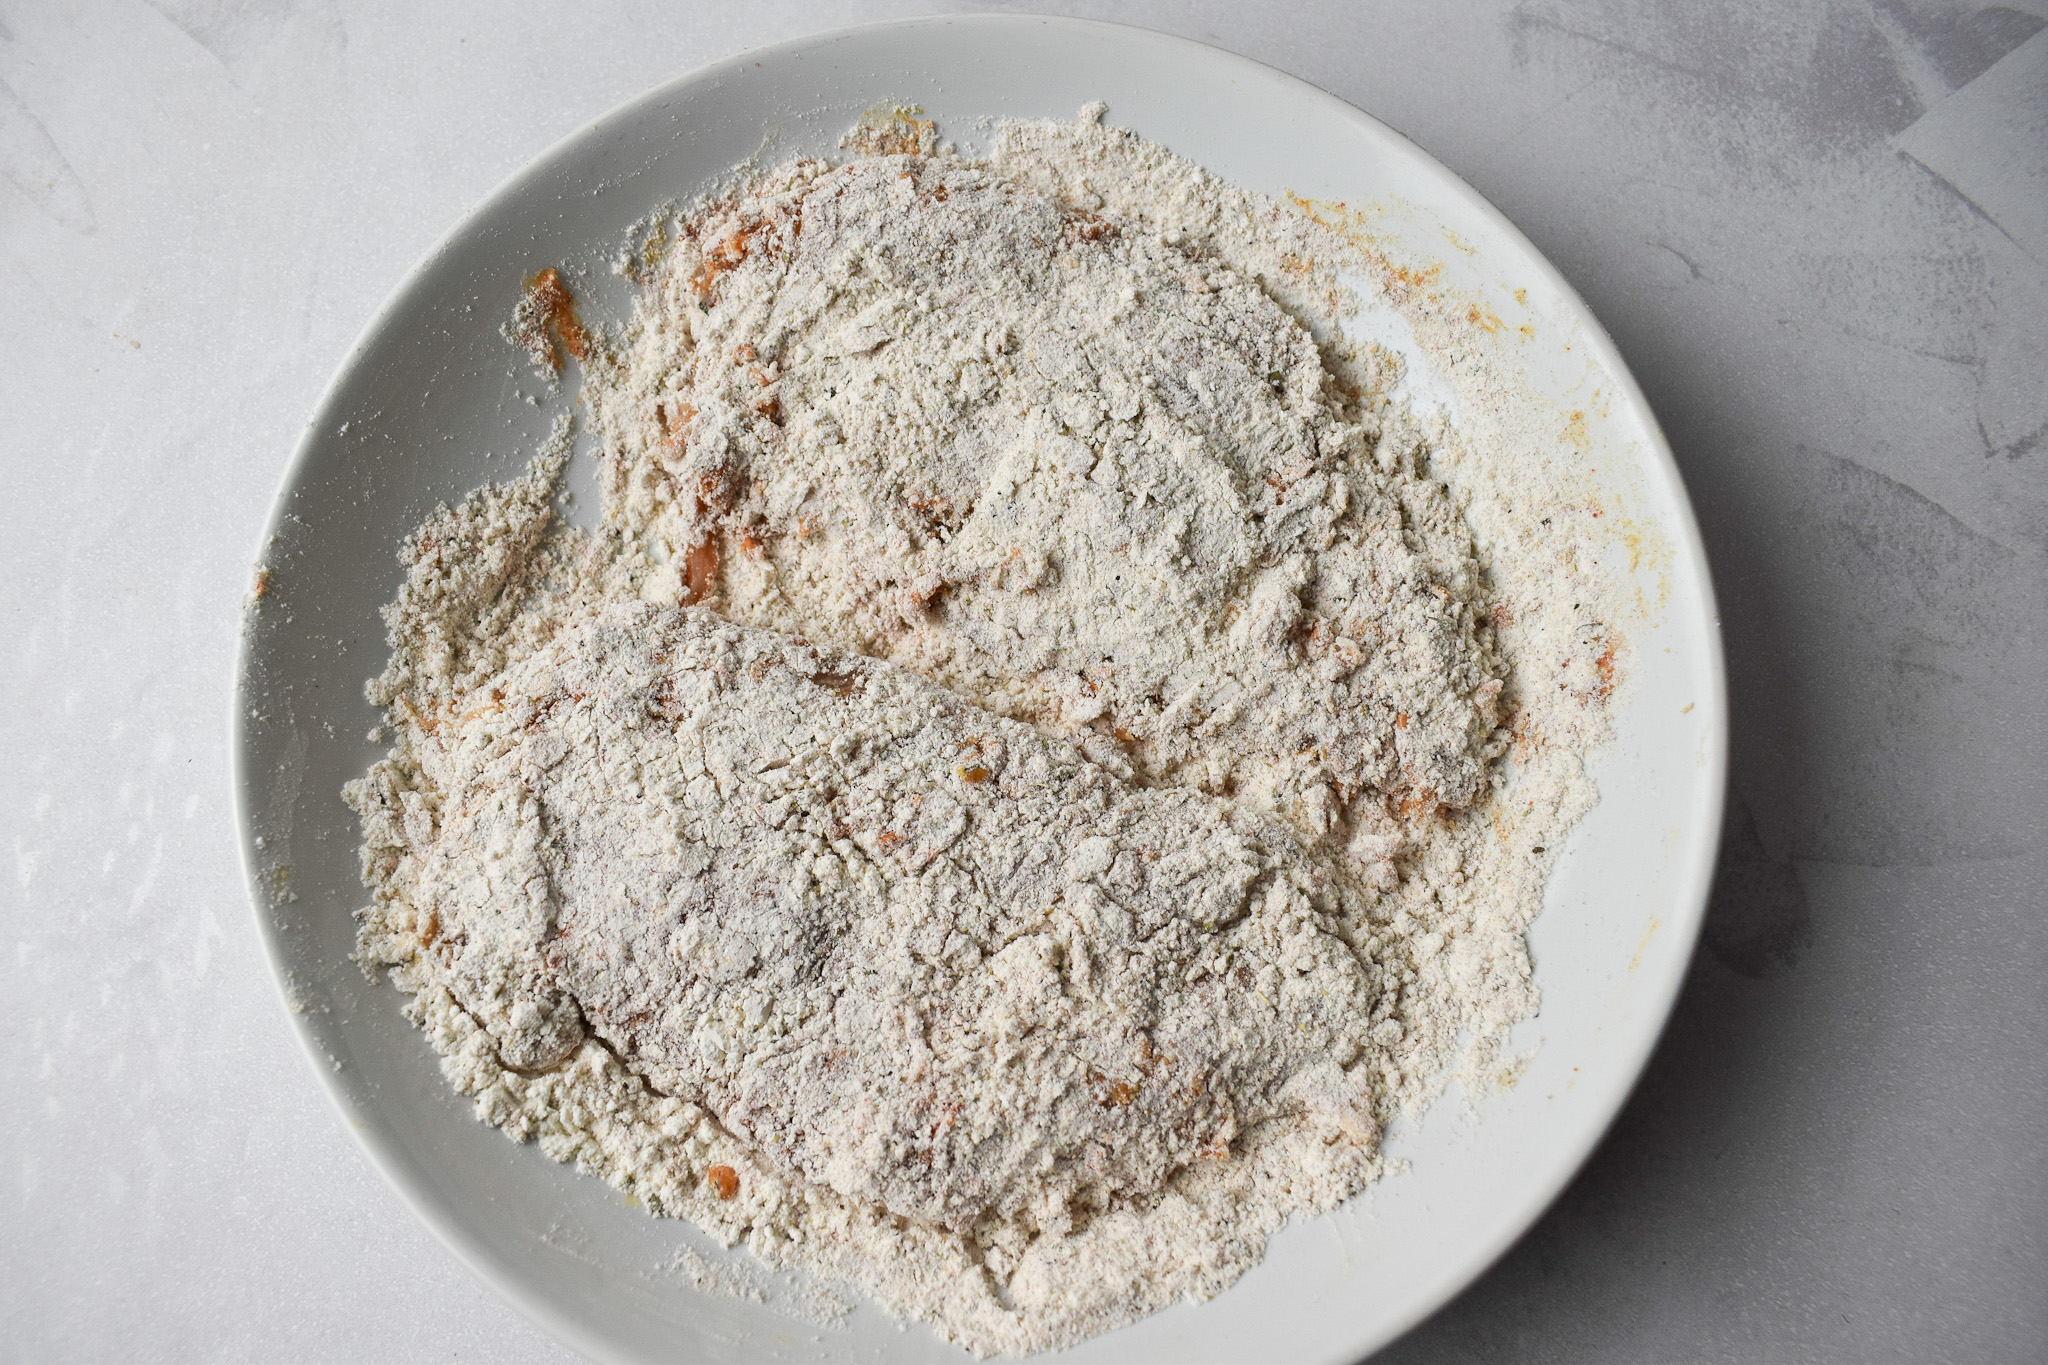 Raw chicken breast coated in seasoned flour.